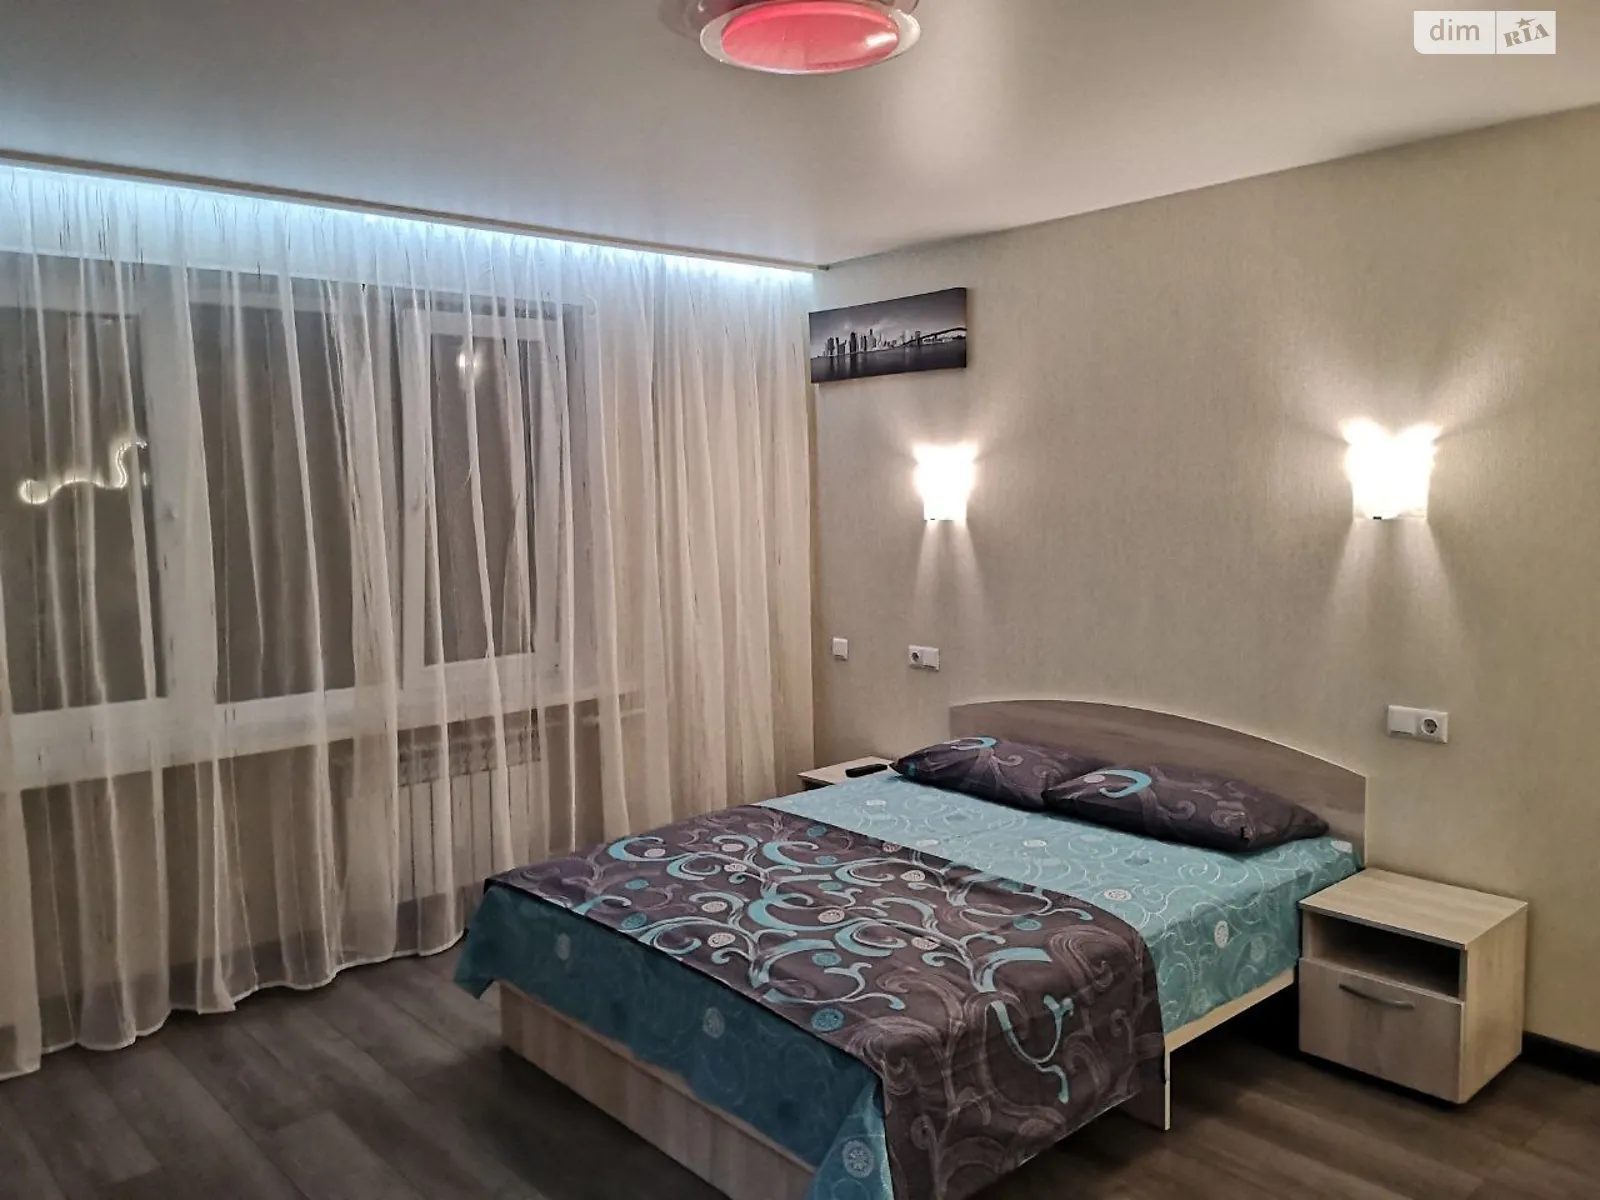 1-кімнатна квартира у Запоріжжі, цена: 1100 грн